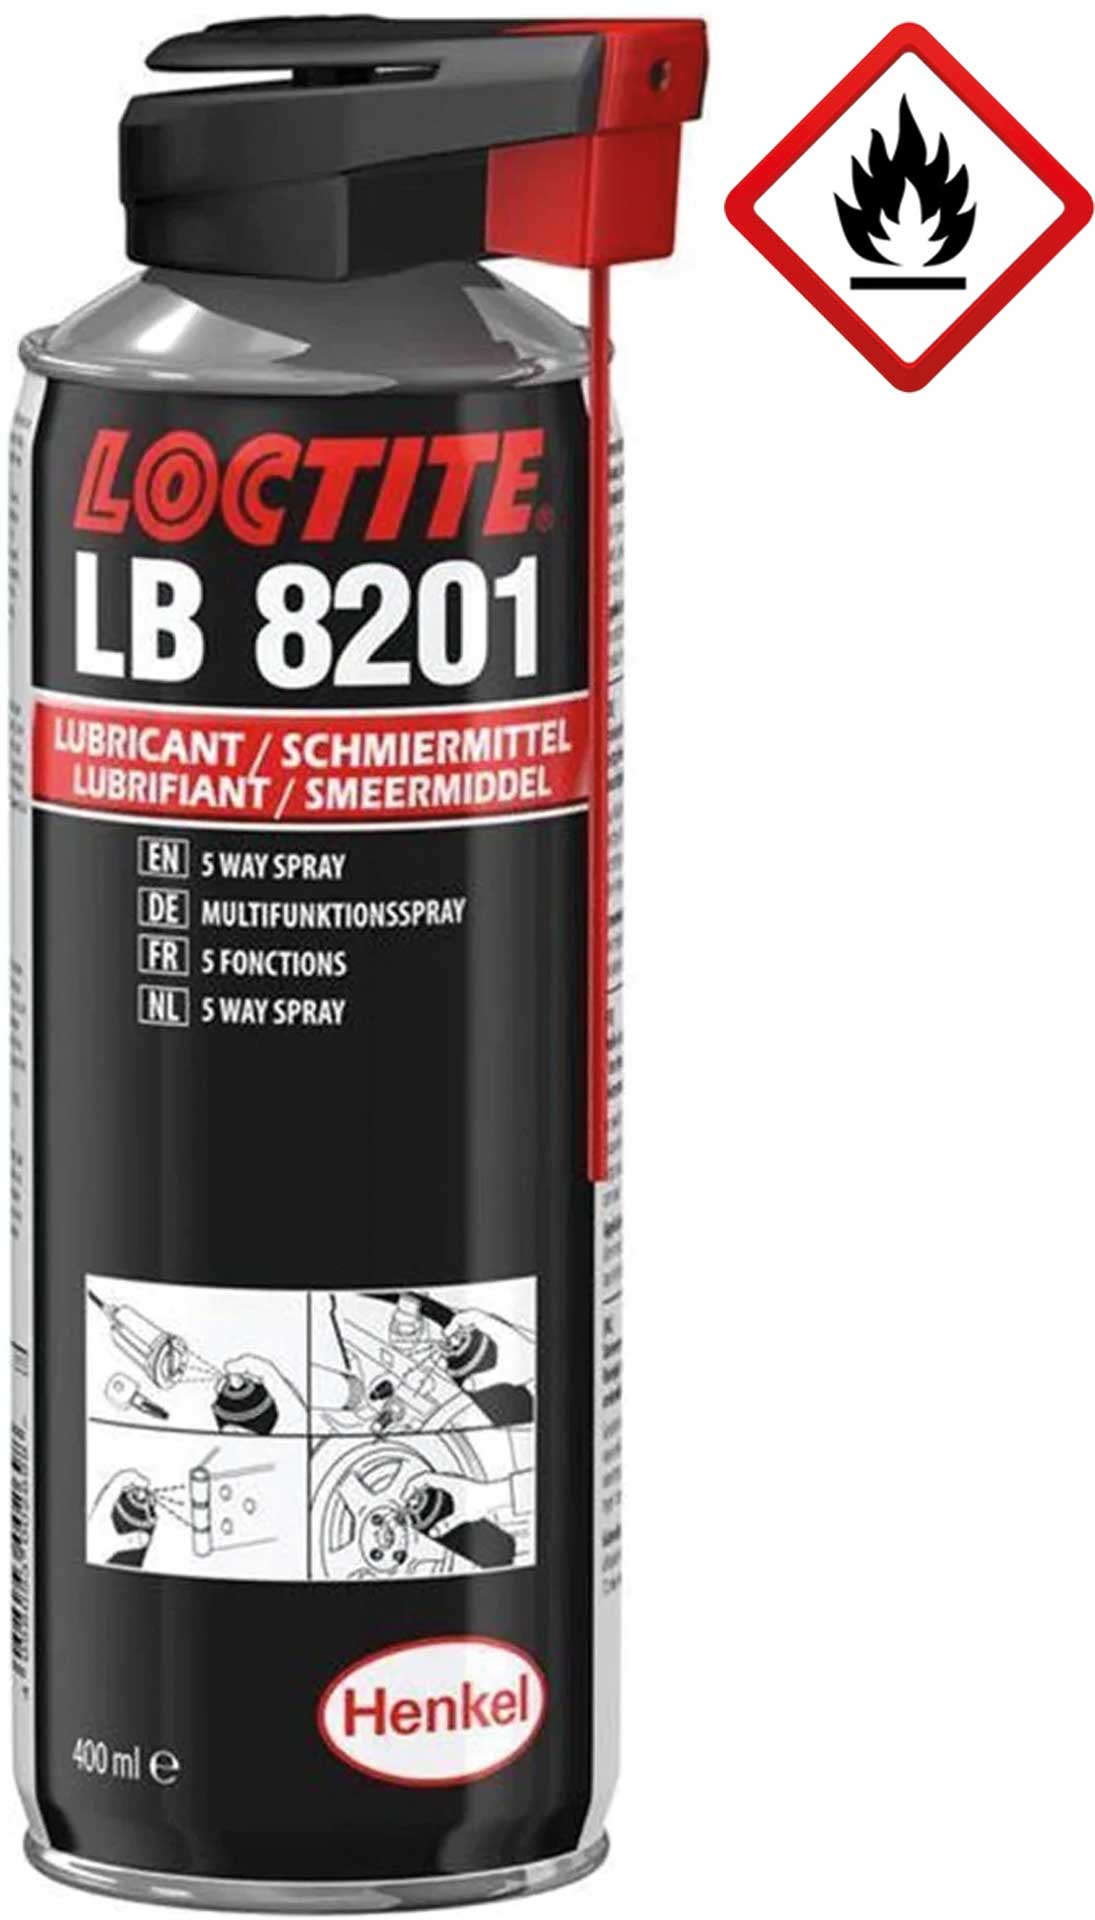 LOCTITE LB 8201 5-way spray 400ml penetrating oil Lubricant